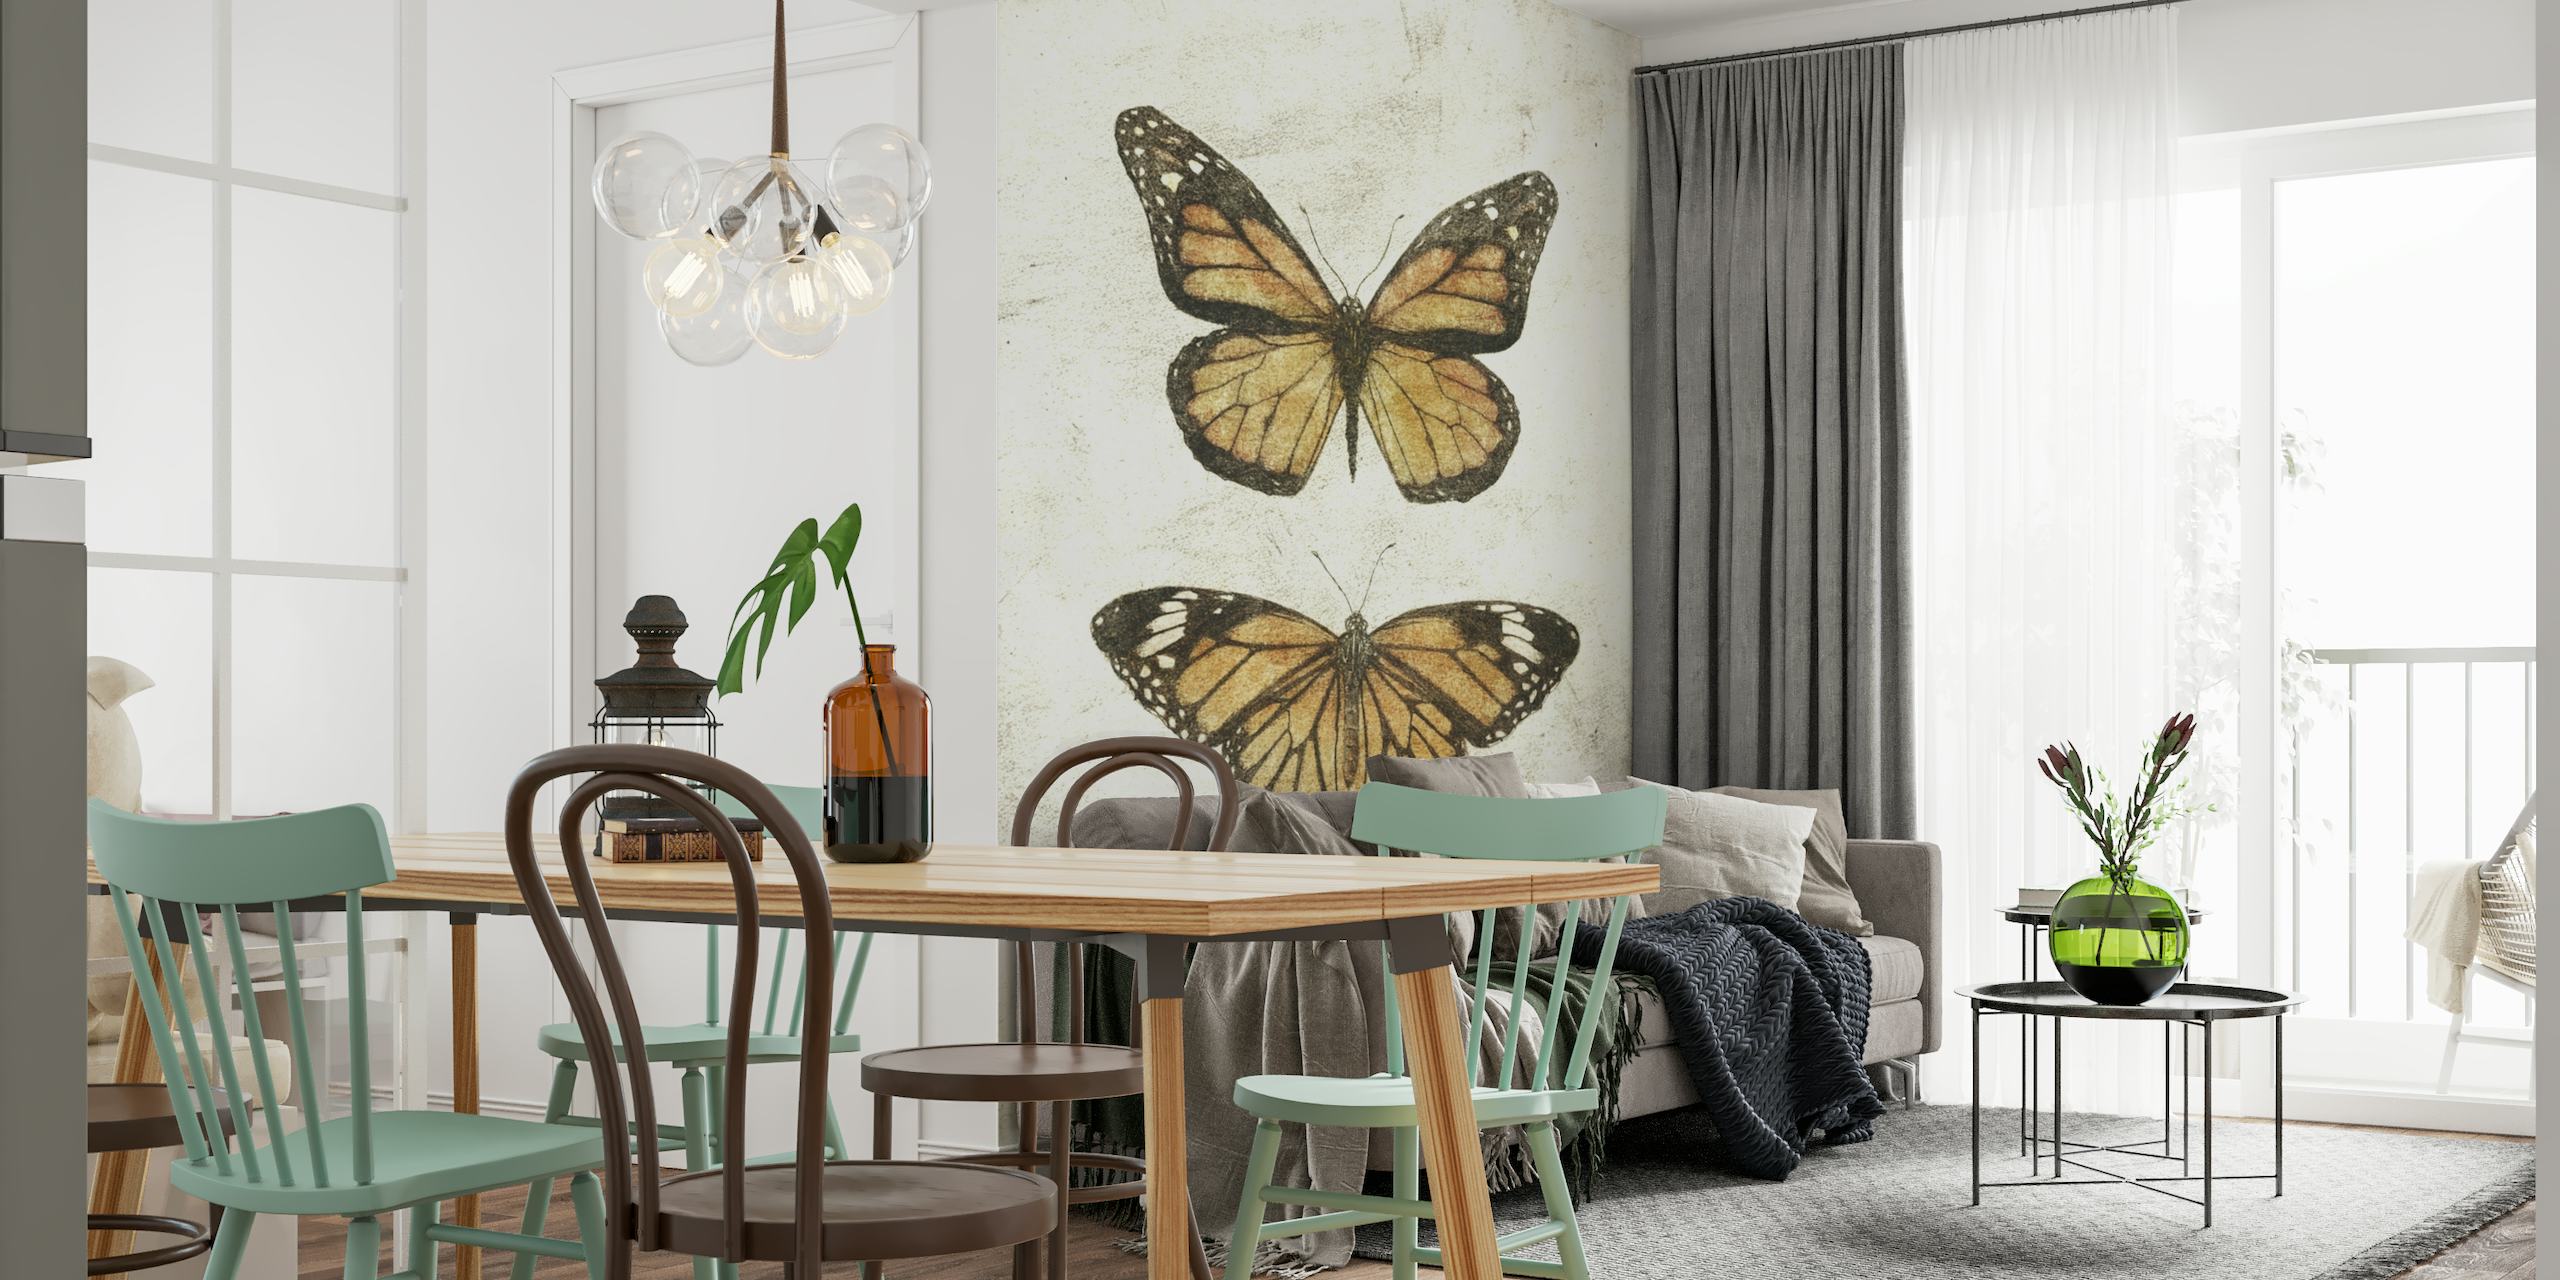 Fotomural Mariposas II con dos mariposas de estilo vintage sobre un fondo con textura natural